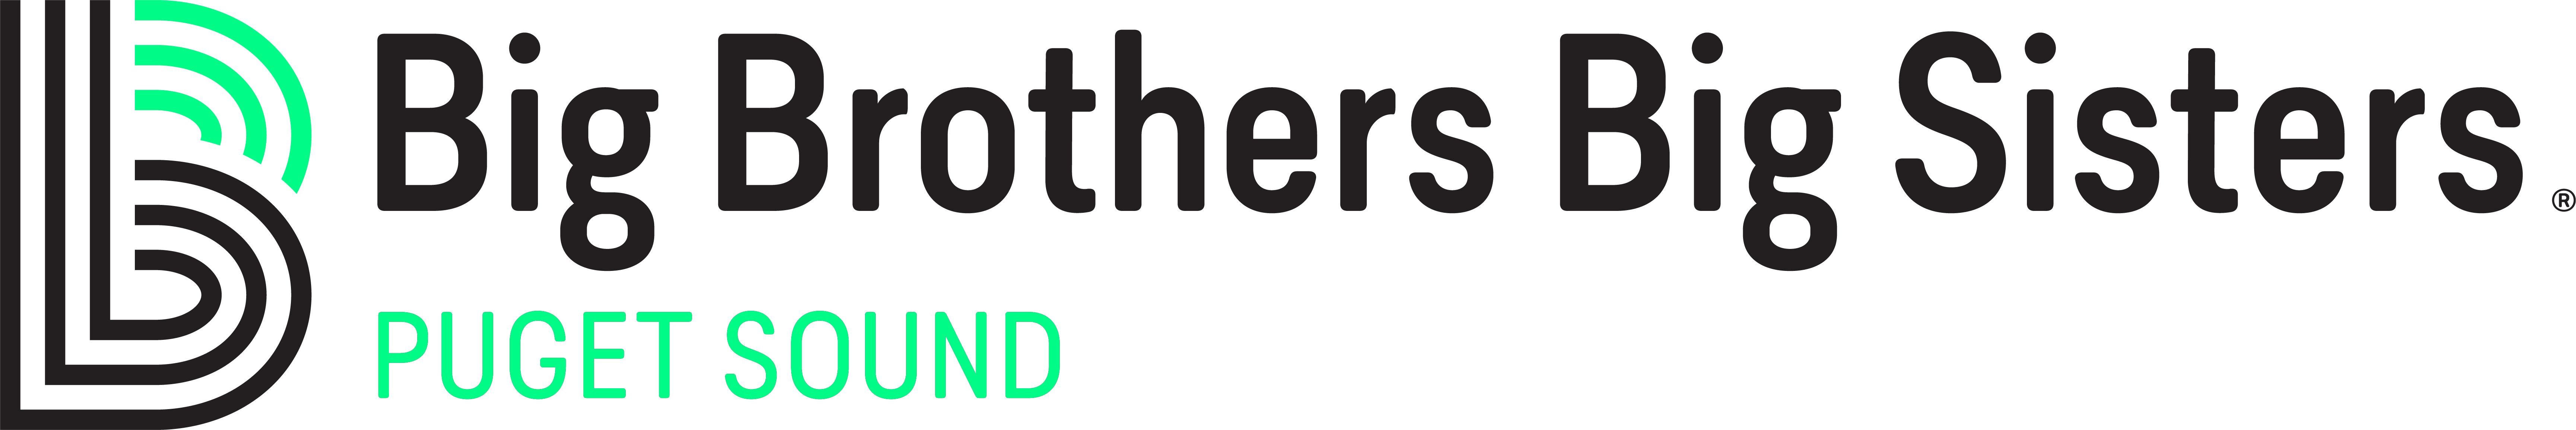 Big Brothers Big Sisters Puget Sound logo